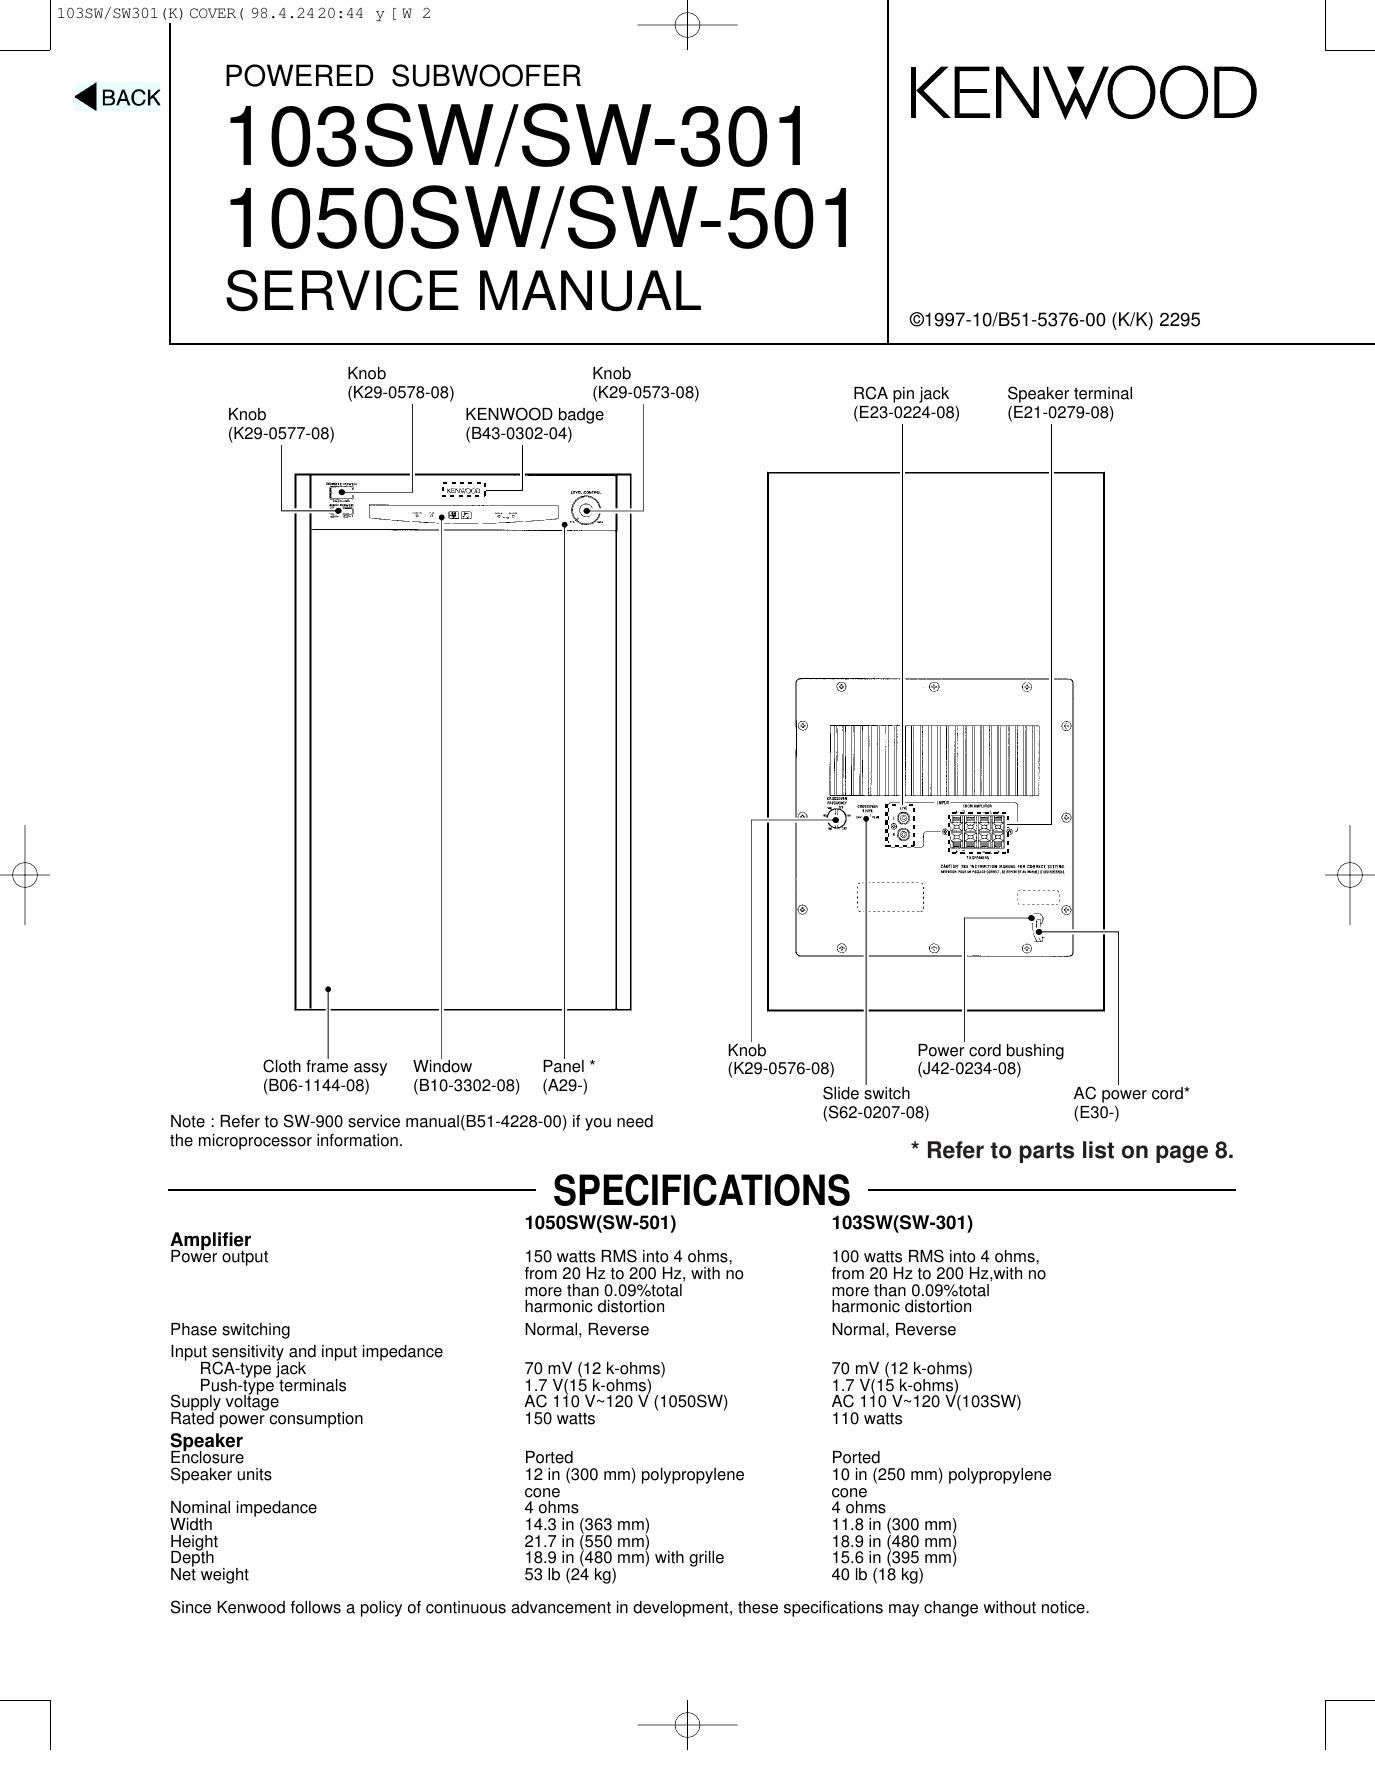 Kenwood 103 SW Service Manual